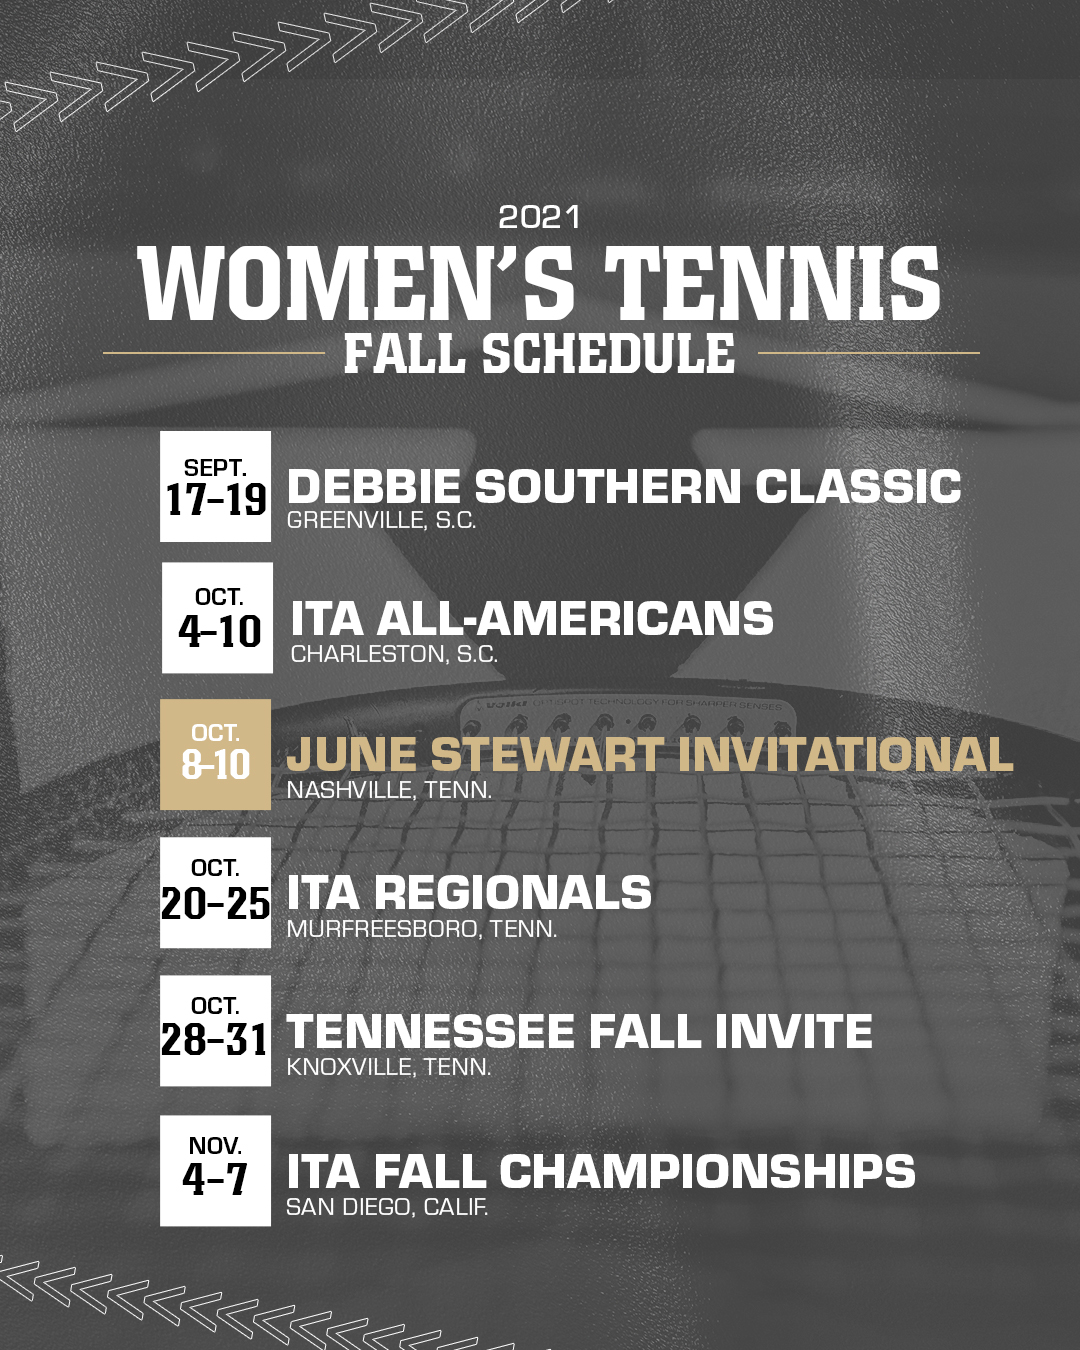 Vanderbilt Women's Tennis | Set for Fall Season